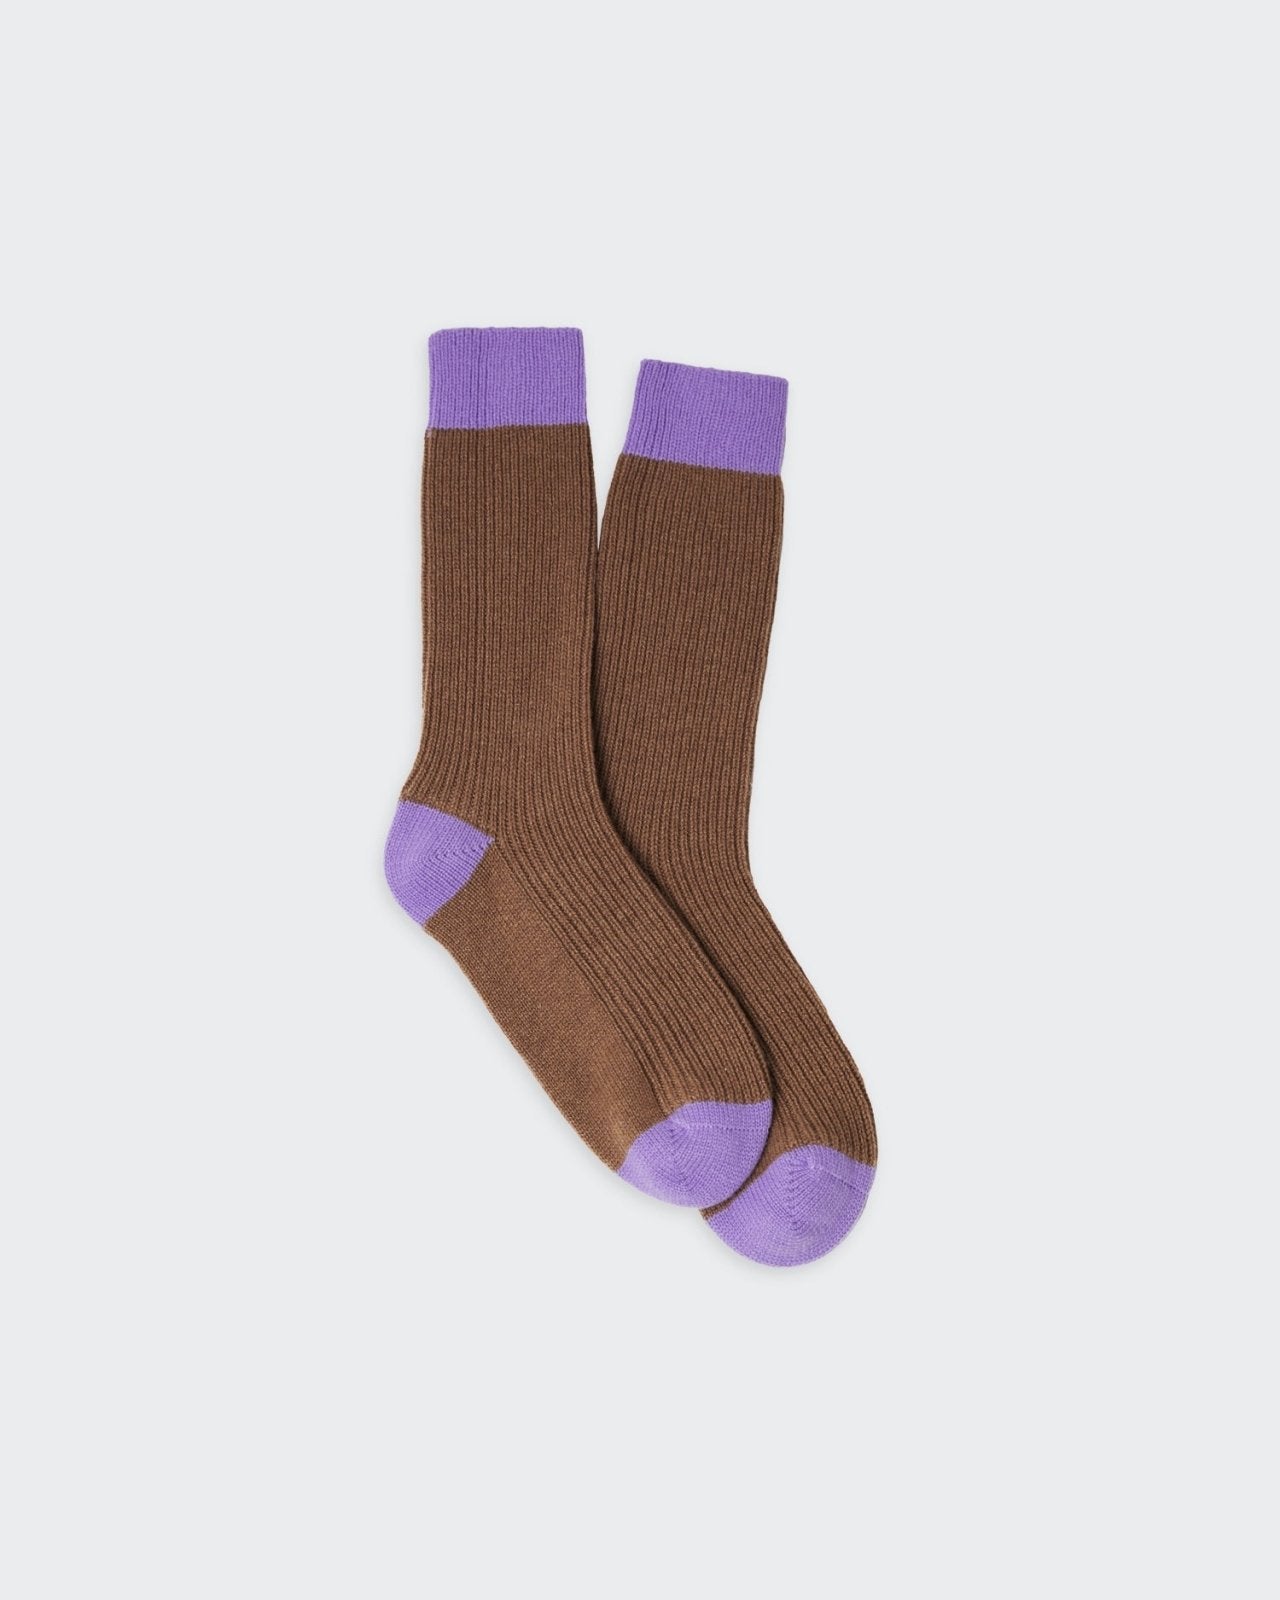 The Soft Socks - Almond/Purple Haze